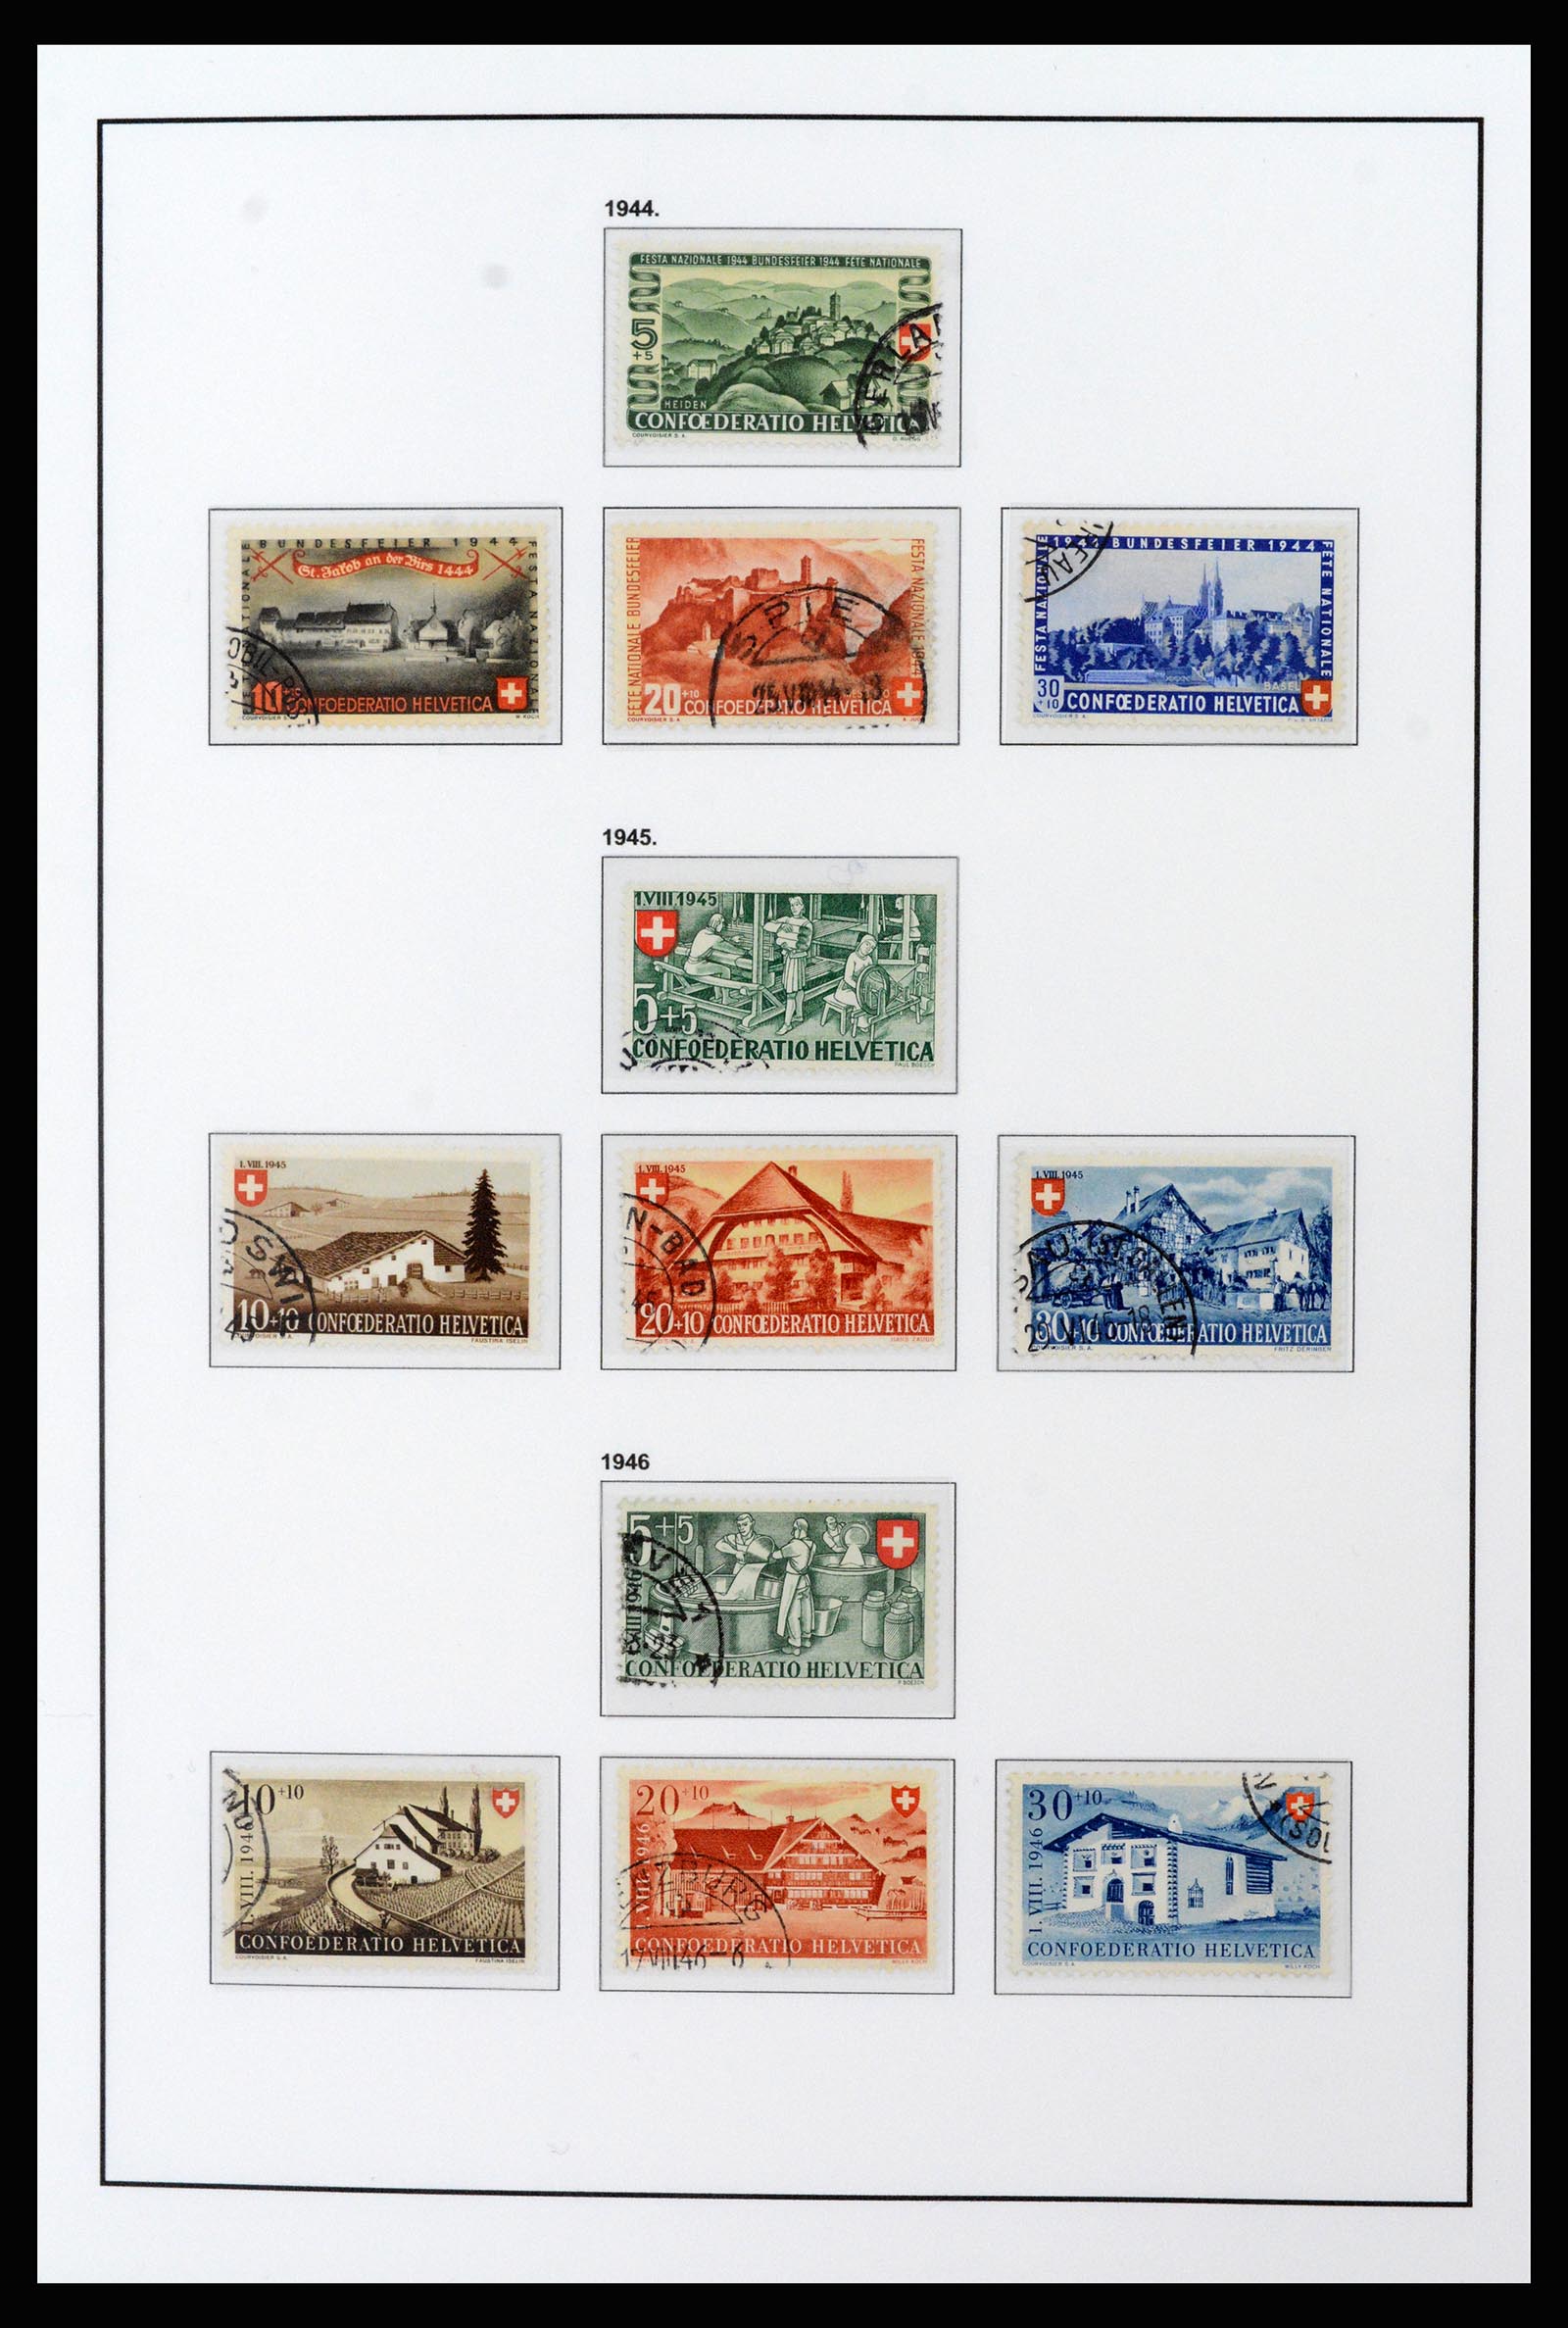 37225 077 - Stamp collection 37225 Switzerland 1854-2020.